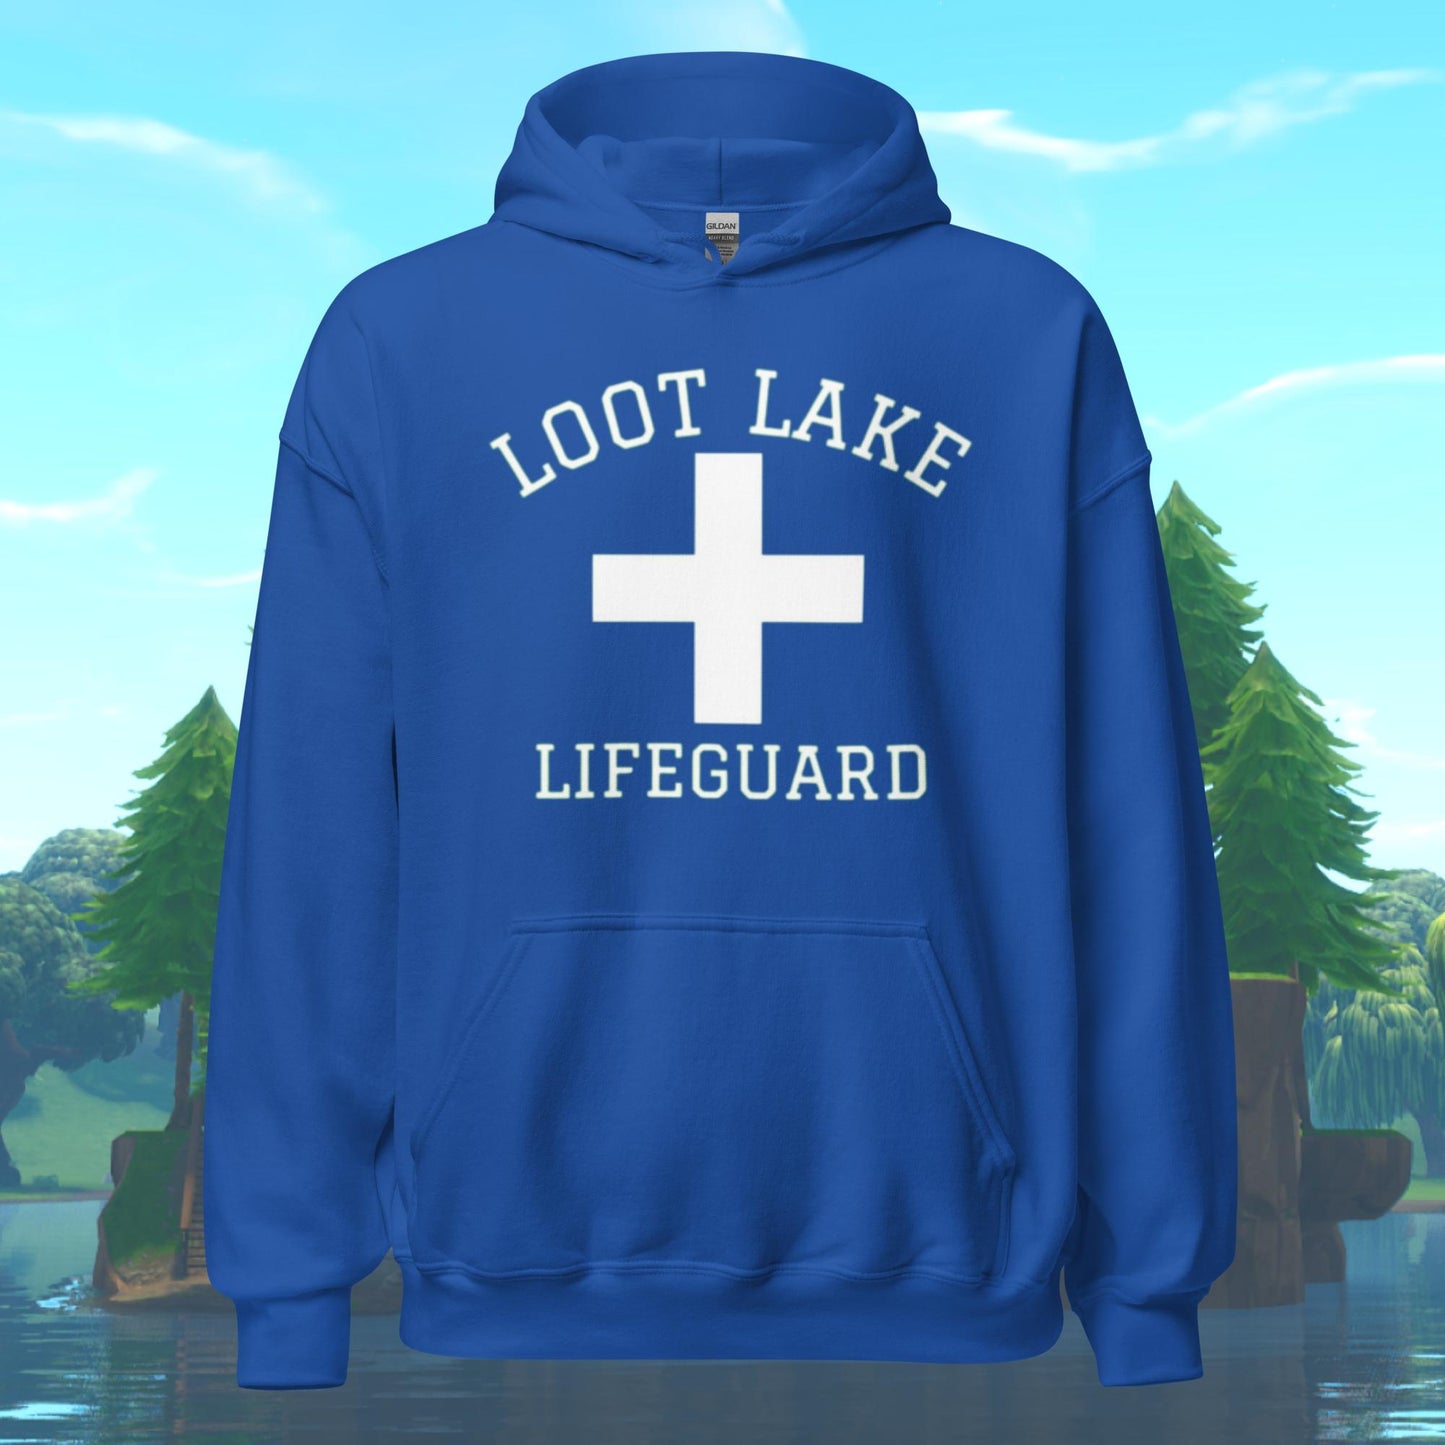 Loot Lake Lifeguard Hoodie